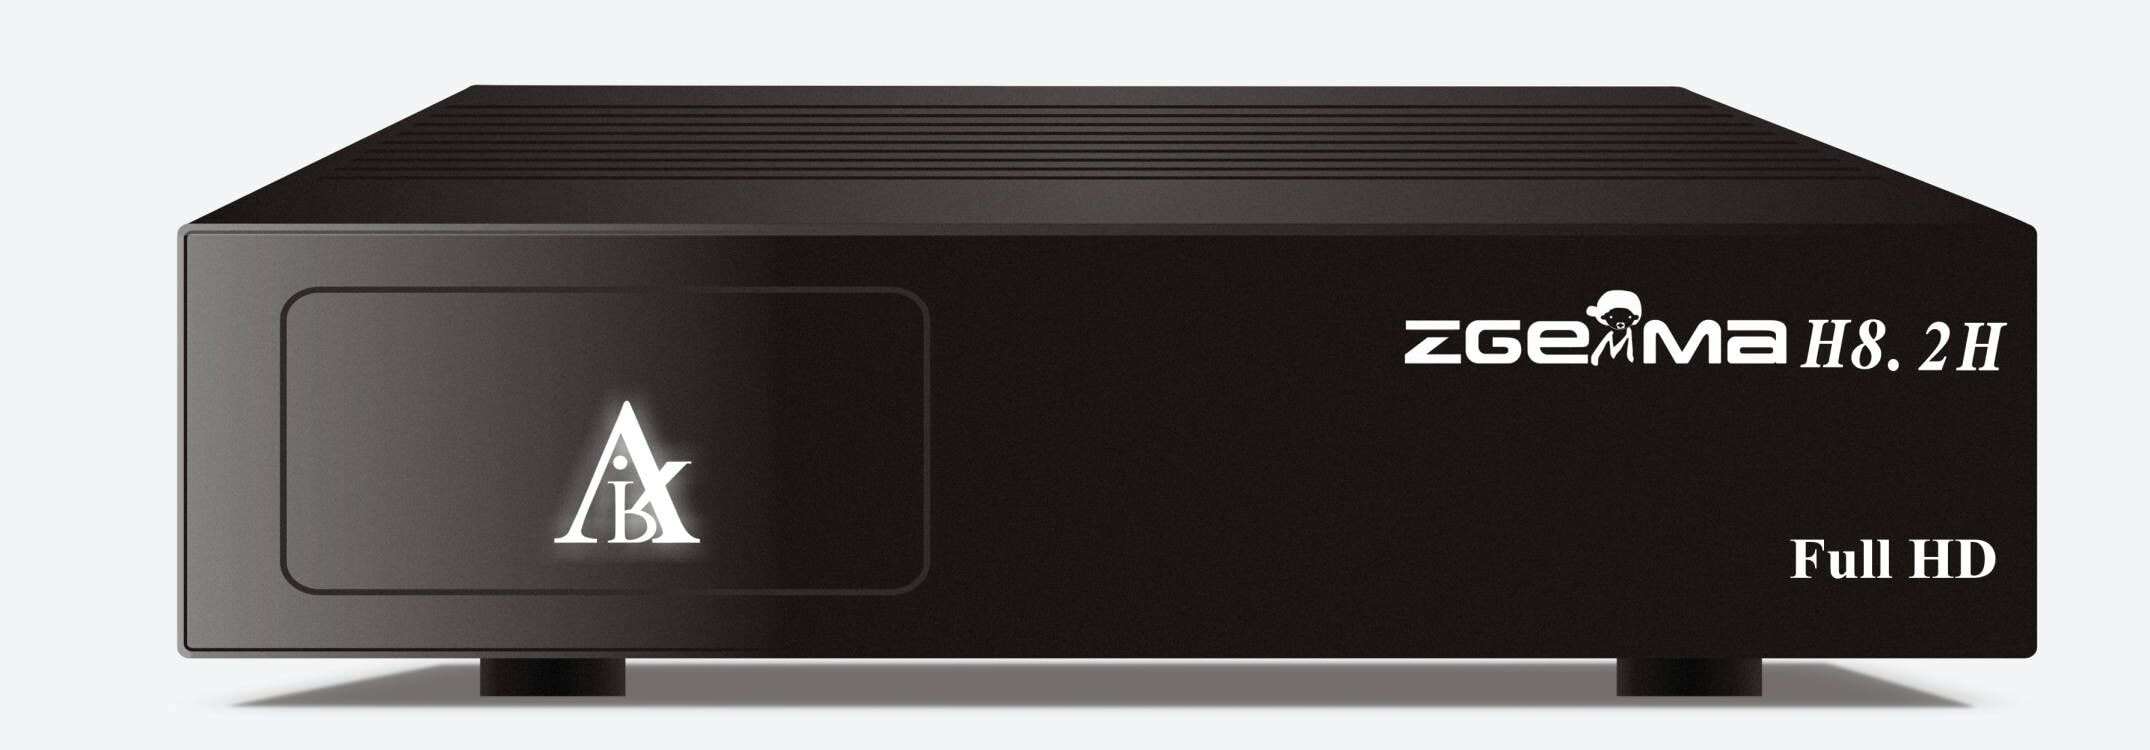 Zgemma H8.2h Satellite TV Receiver - Enigma2 Linux OS, DVB-S2X +